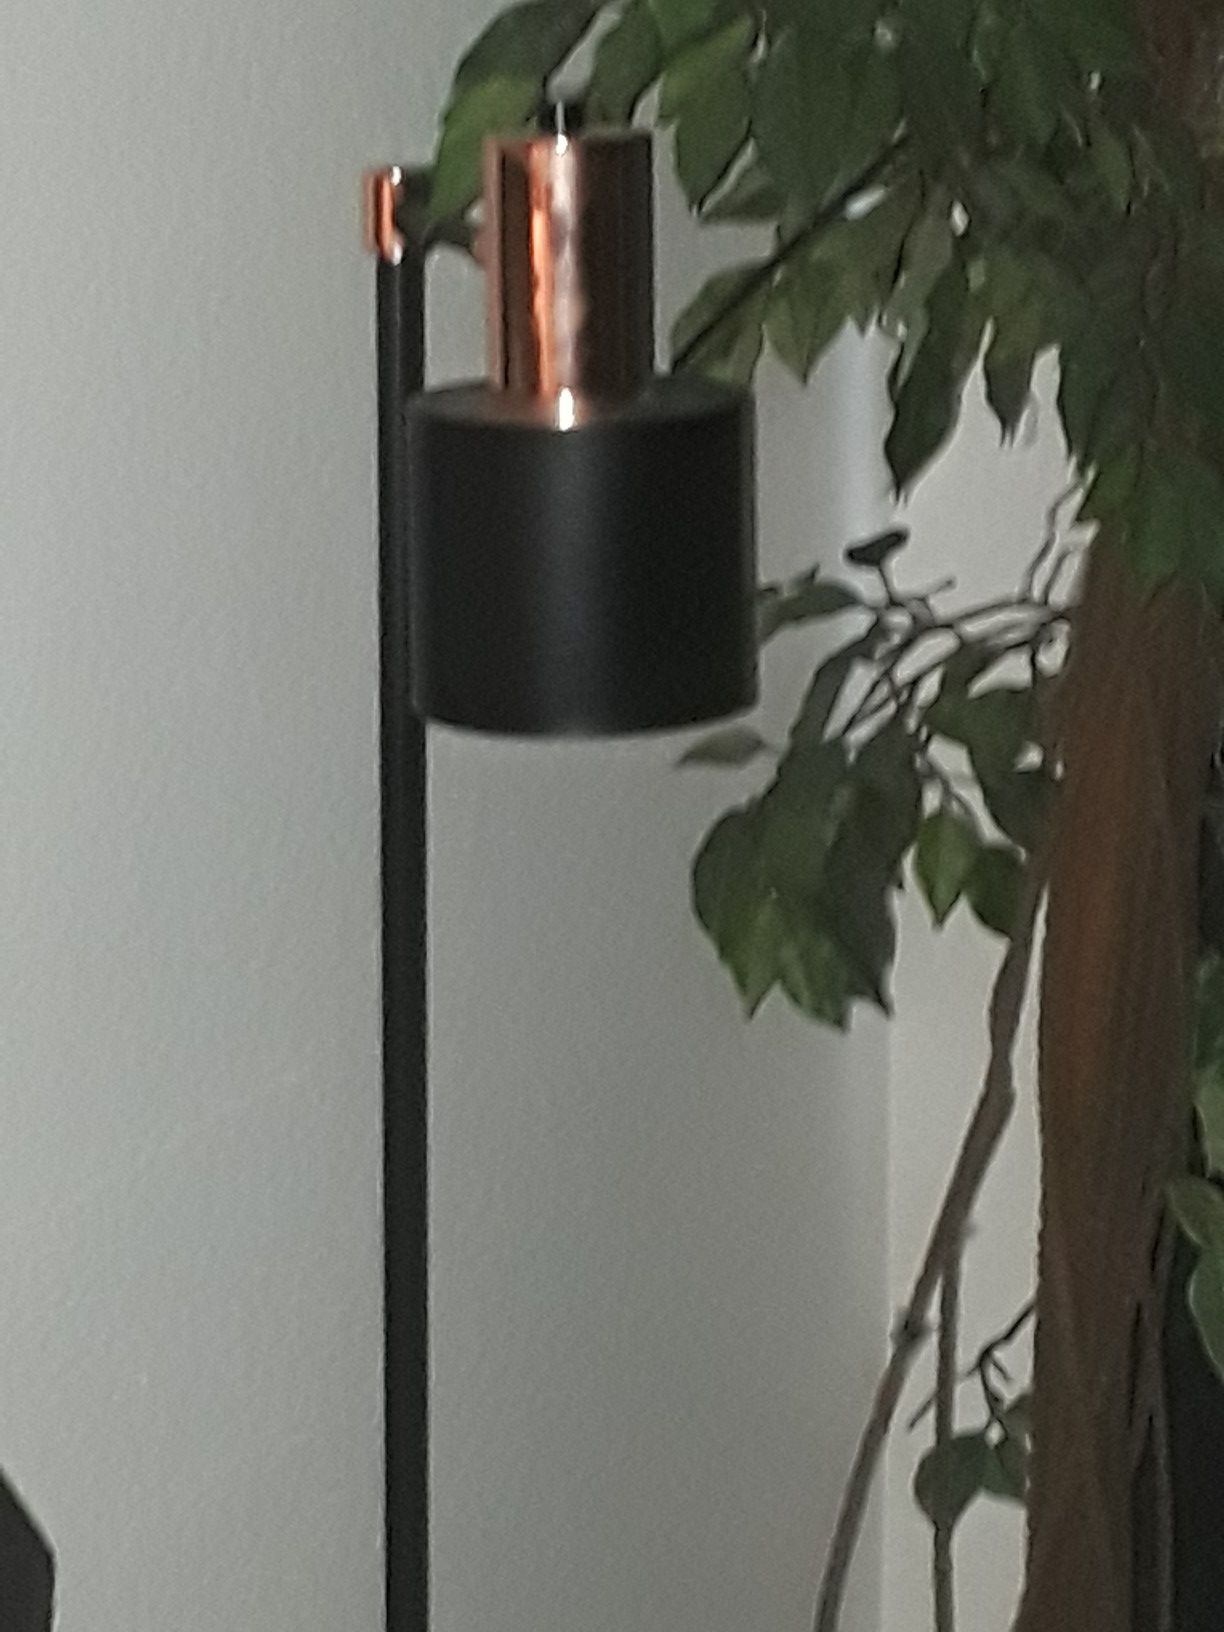 Copper and Black floor lamp - $10